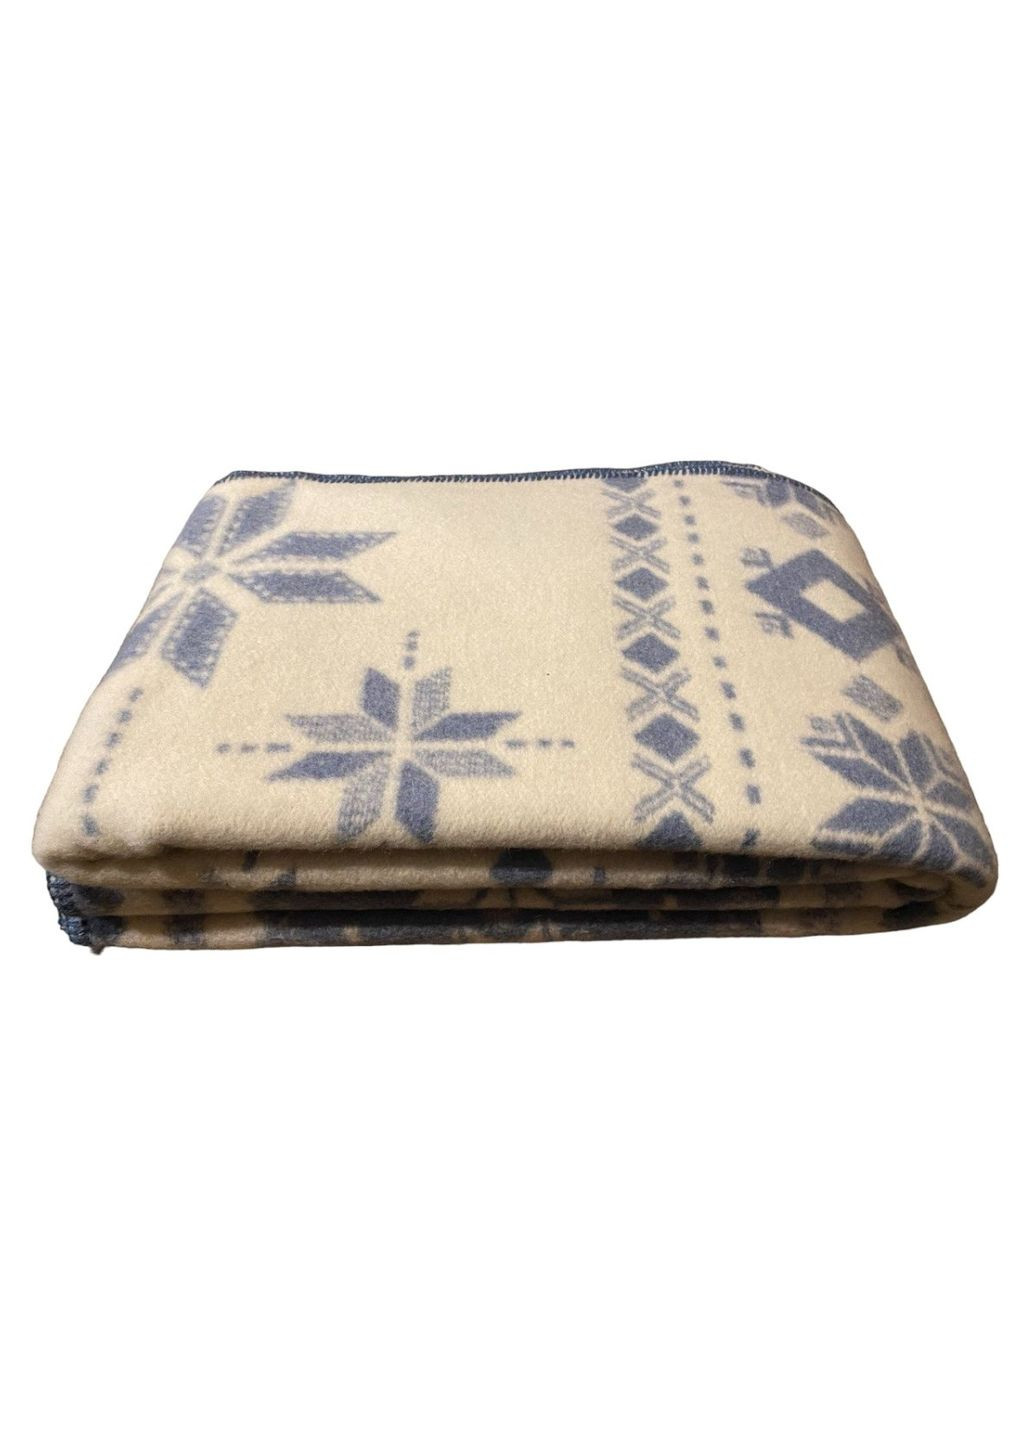 Одеяло жаккардовое шерстяное Снежинки бело-серо-голубое 140х205 Vladi (283299300)